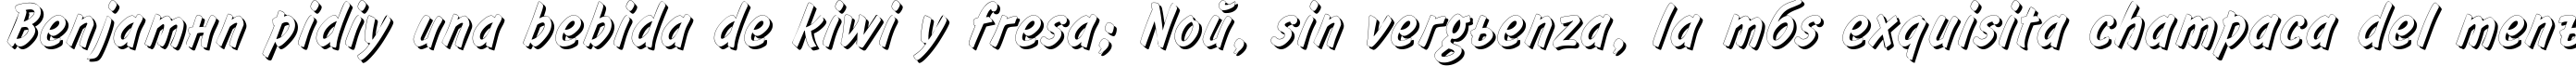 Пример написания шрифтом InformShadowCTT текста на испанском